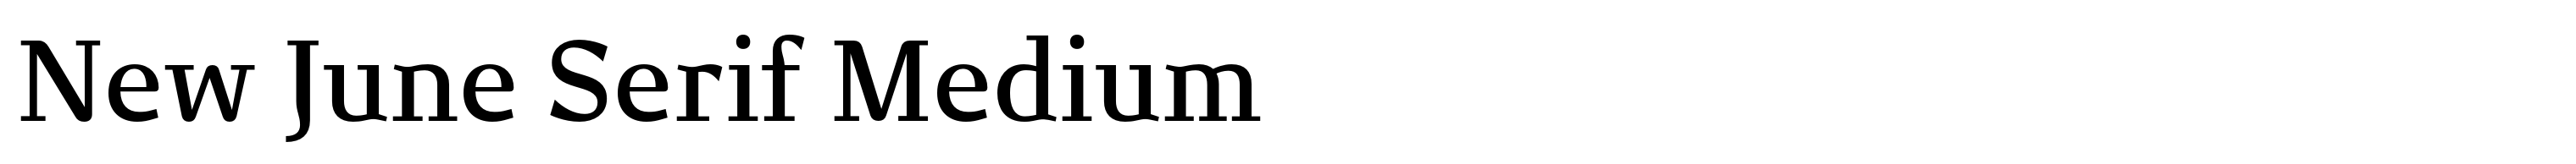 New June Serif Medium